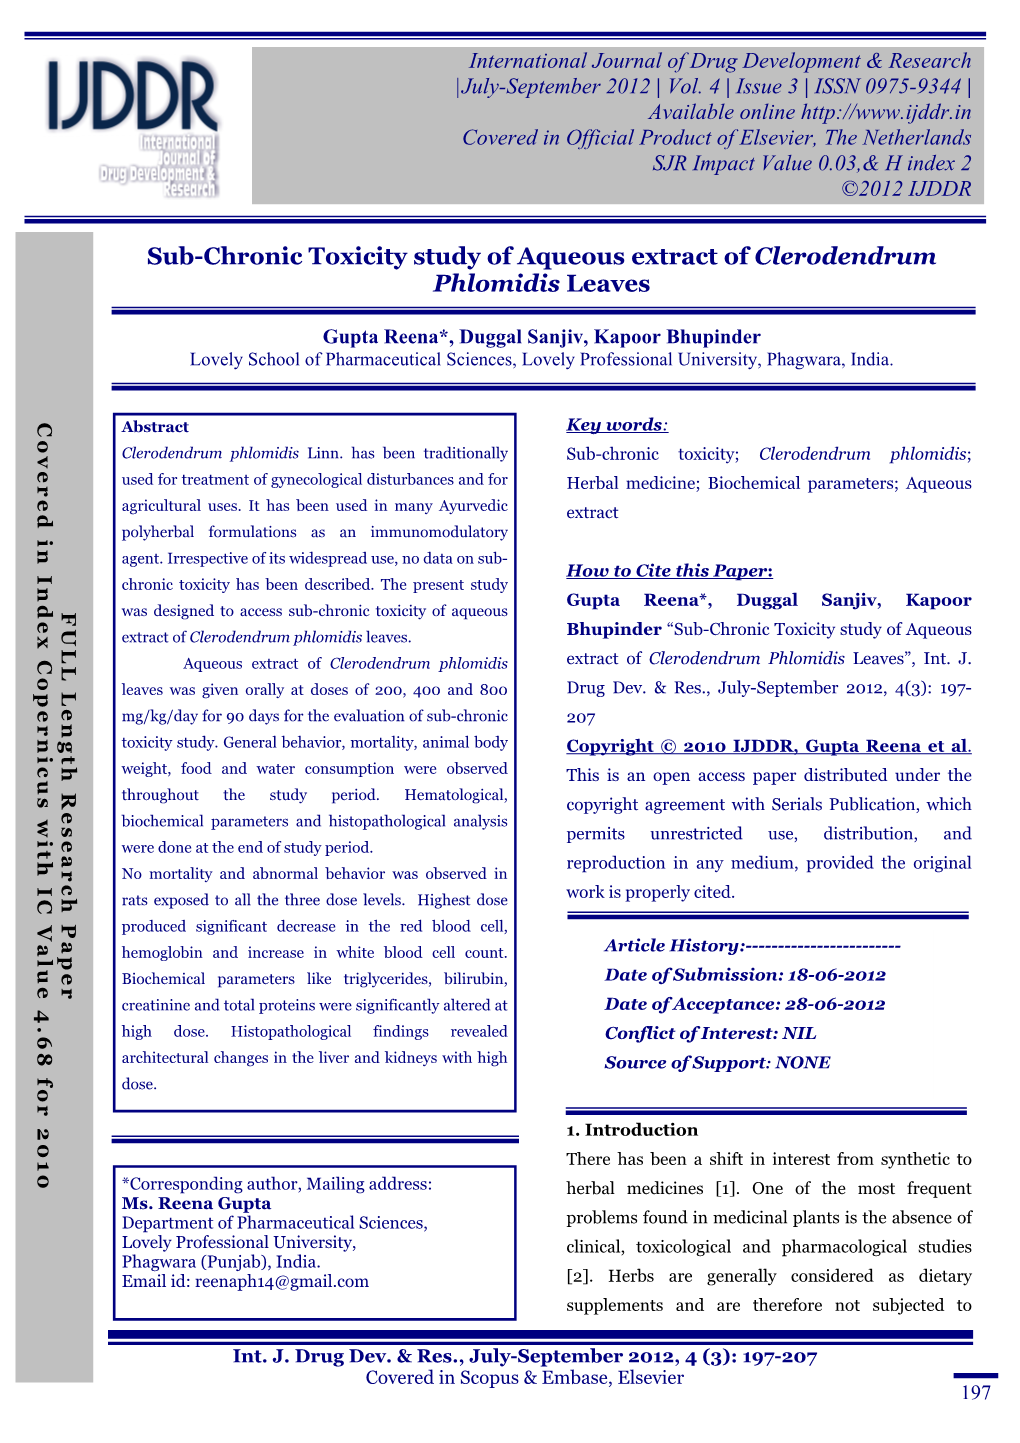 Sub-Chronic Toxicity Study of Aqueous Extract of Clerodendrum Phlomidis Leaves